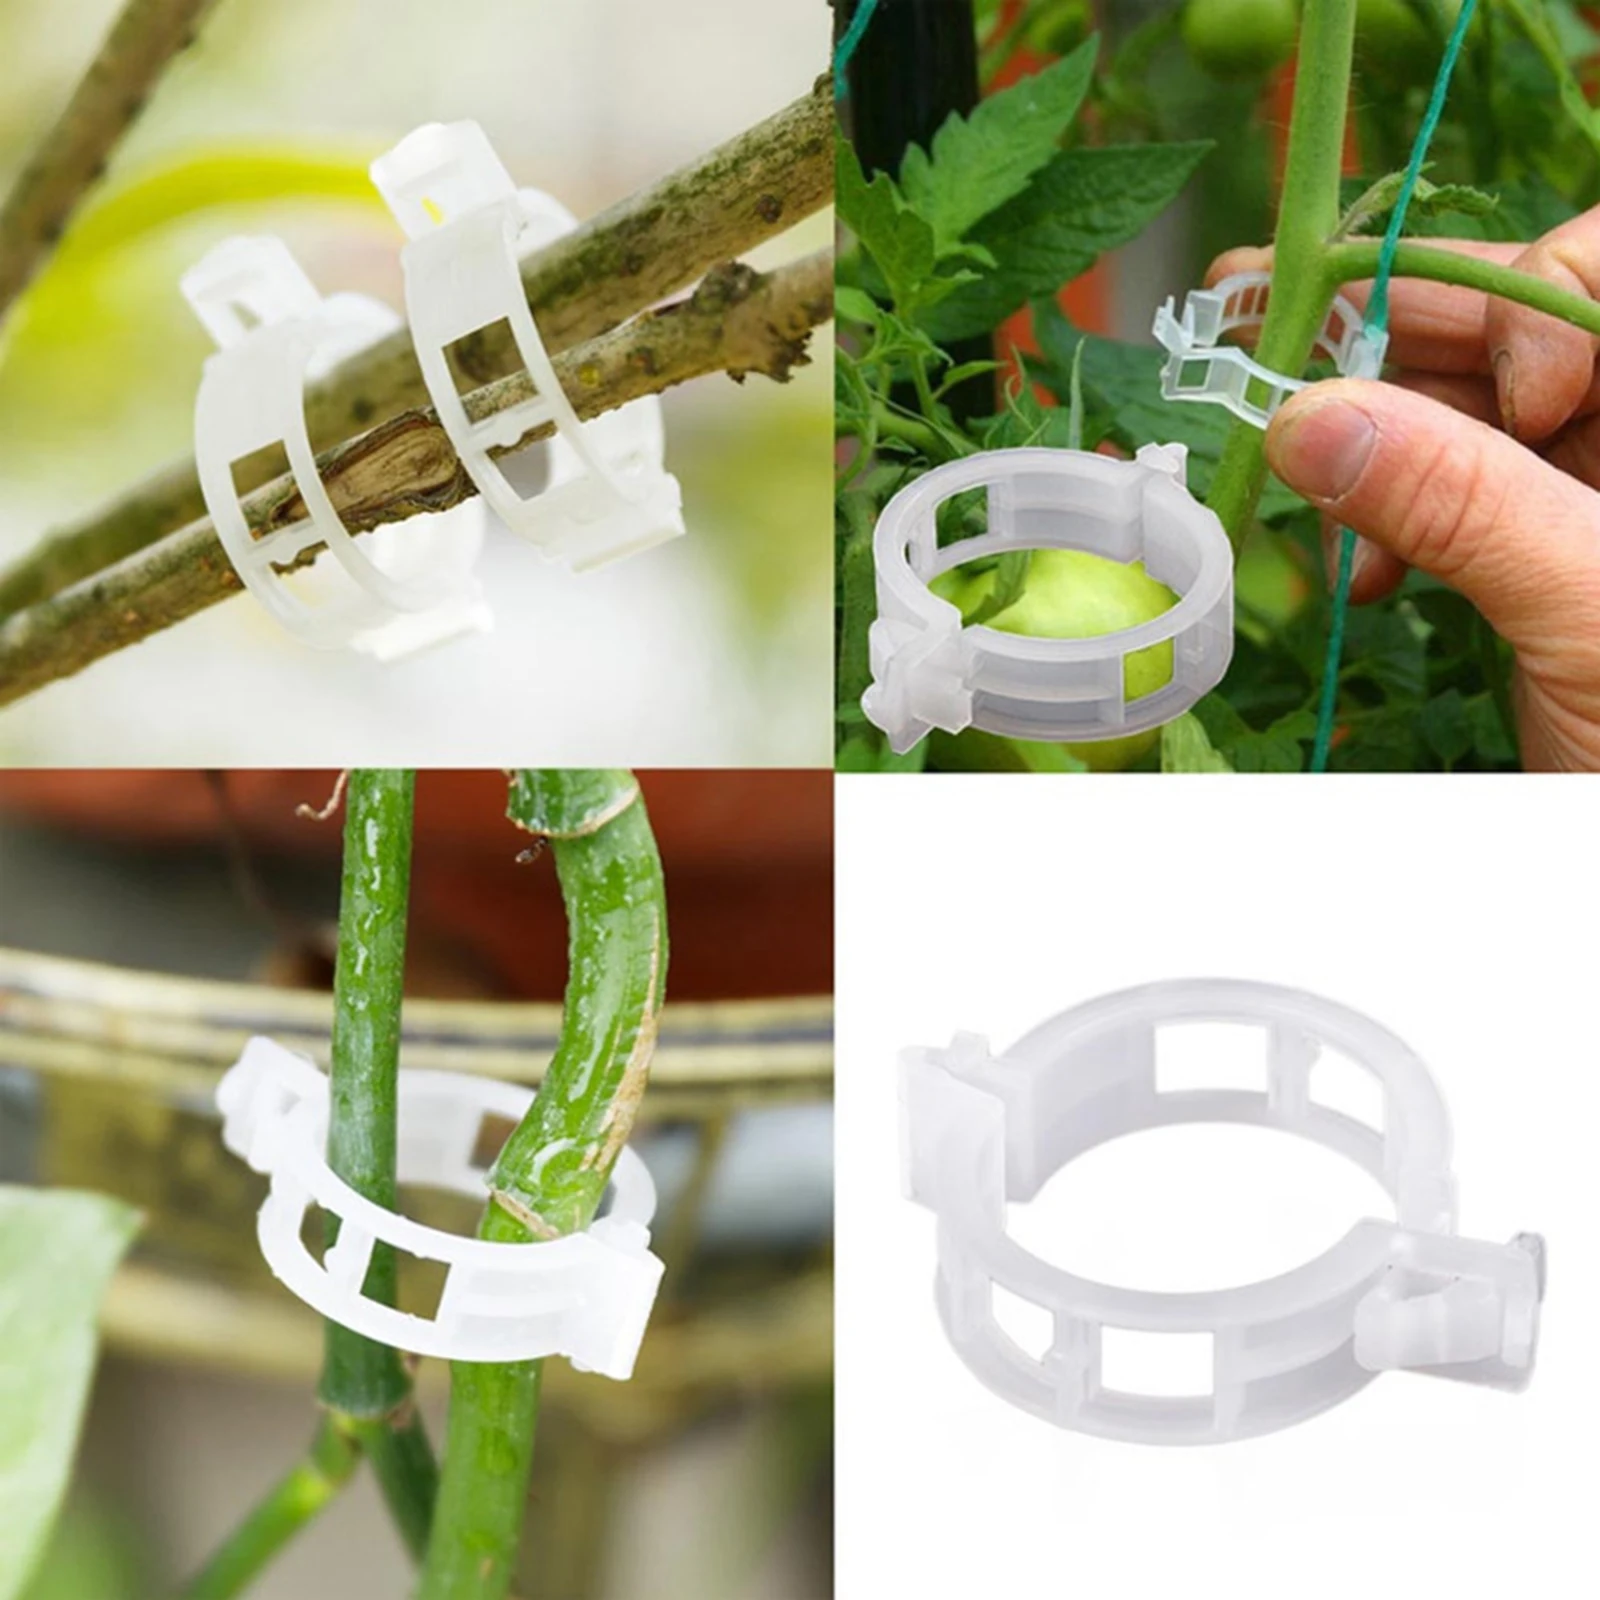 

100pcs Plastic Plant Supports Clips For Tomato Hanging Trellis Vine Connects Plants Greenhouse Vegetables Garden Ornament